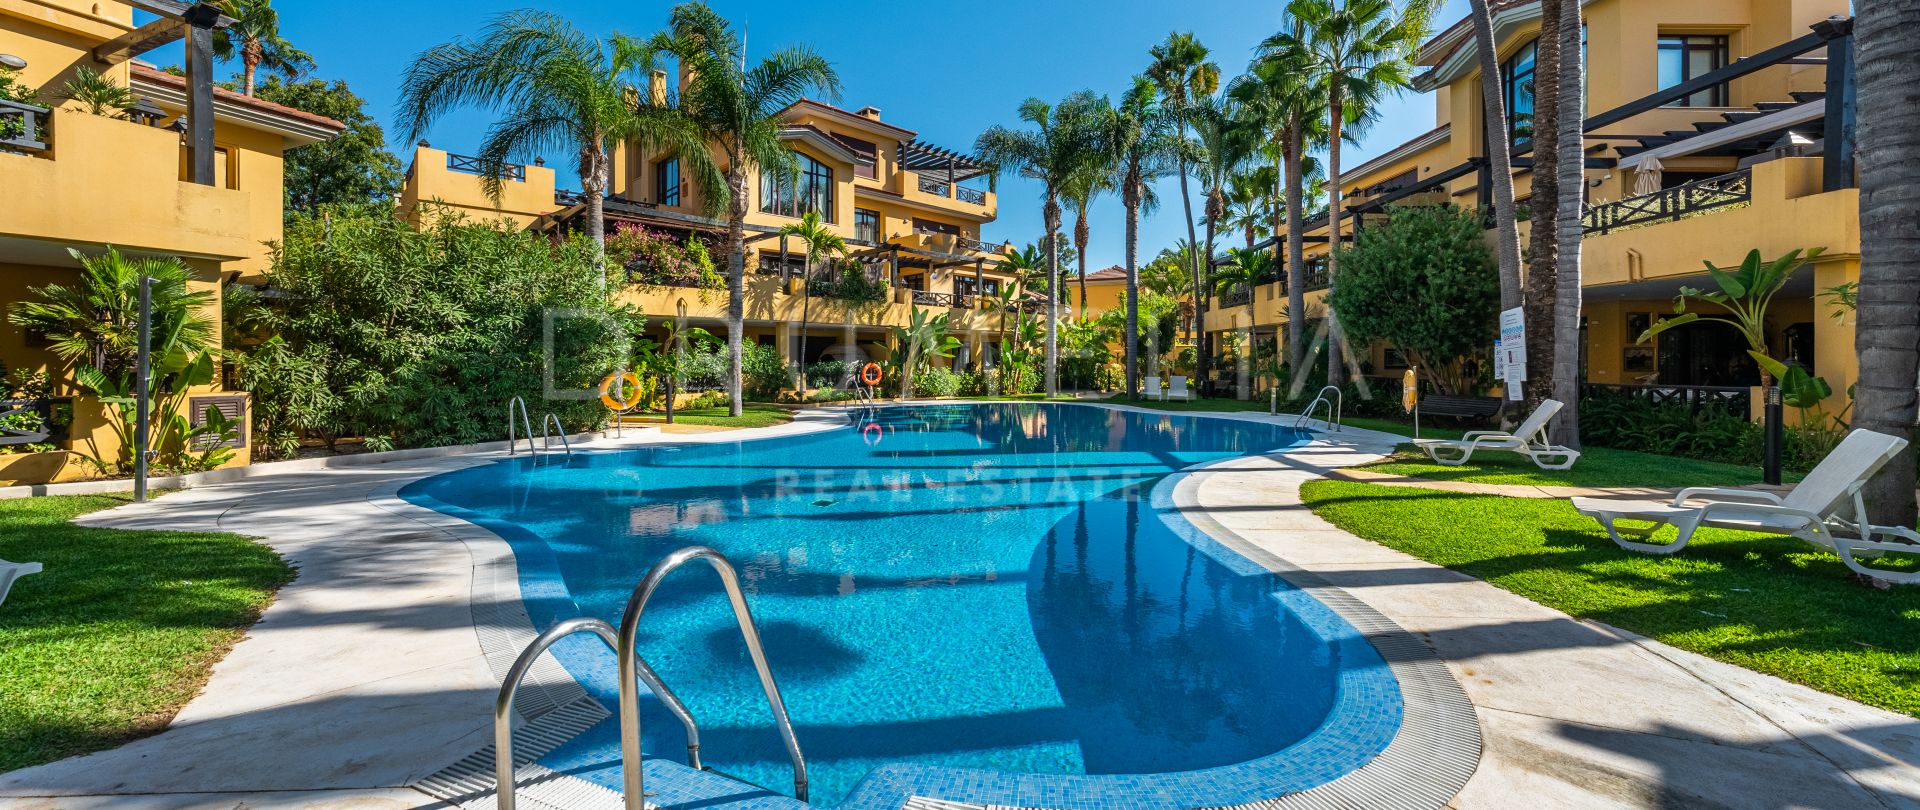 Wunderschöne Luxus-Wohnung zum Verkauf in Strandnähe Bahia de Banus, Puerto Banus, Marbella.